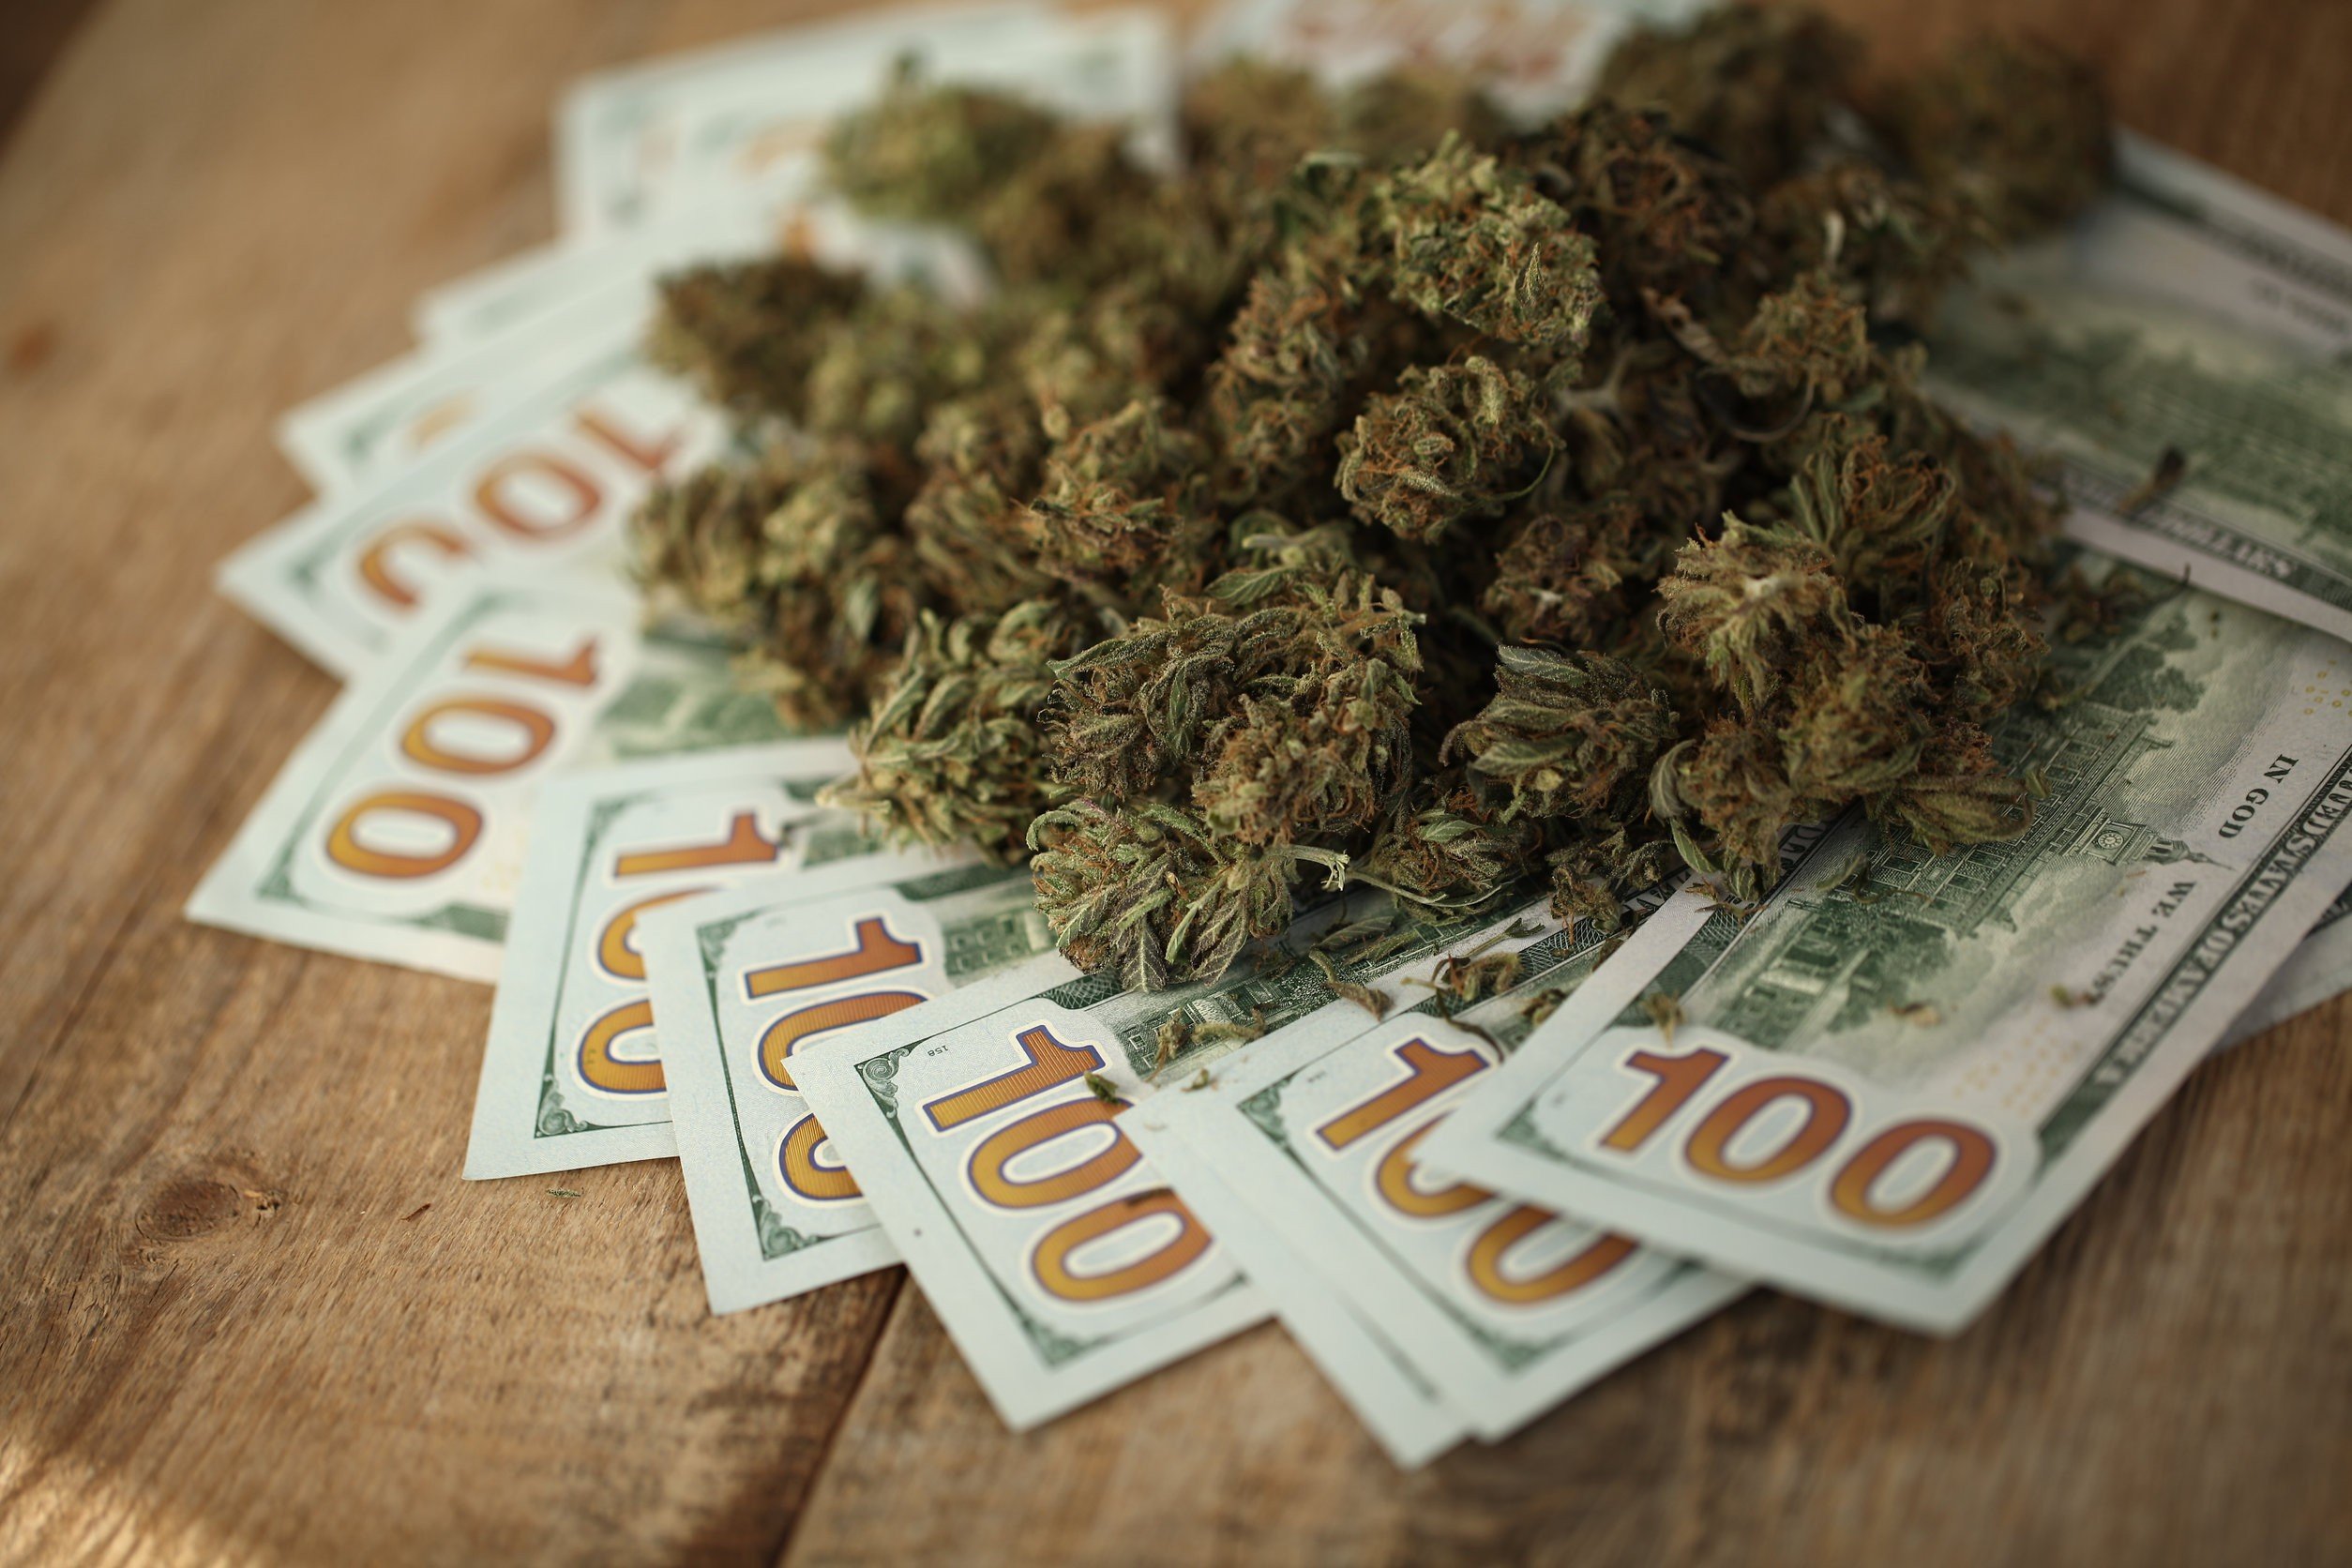 Recreational marijuana sales soar over medical marijuana